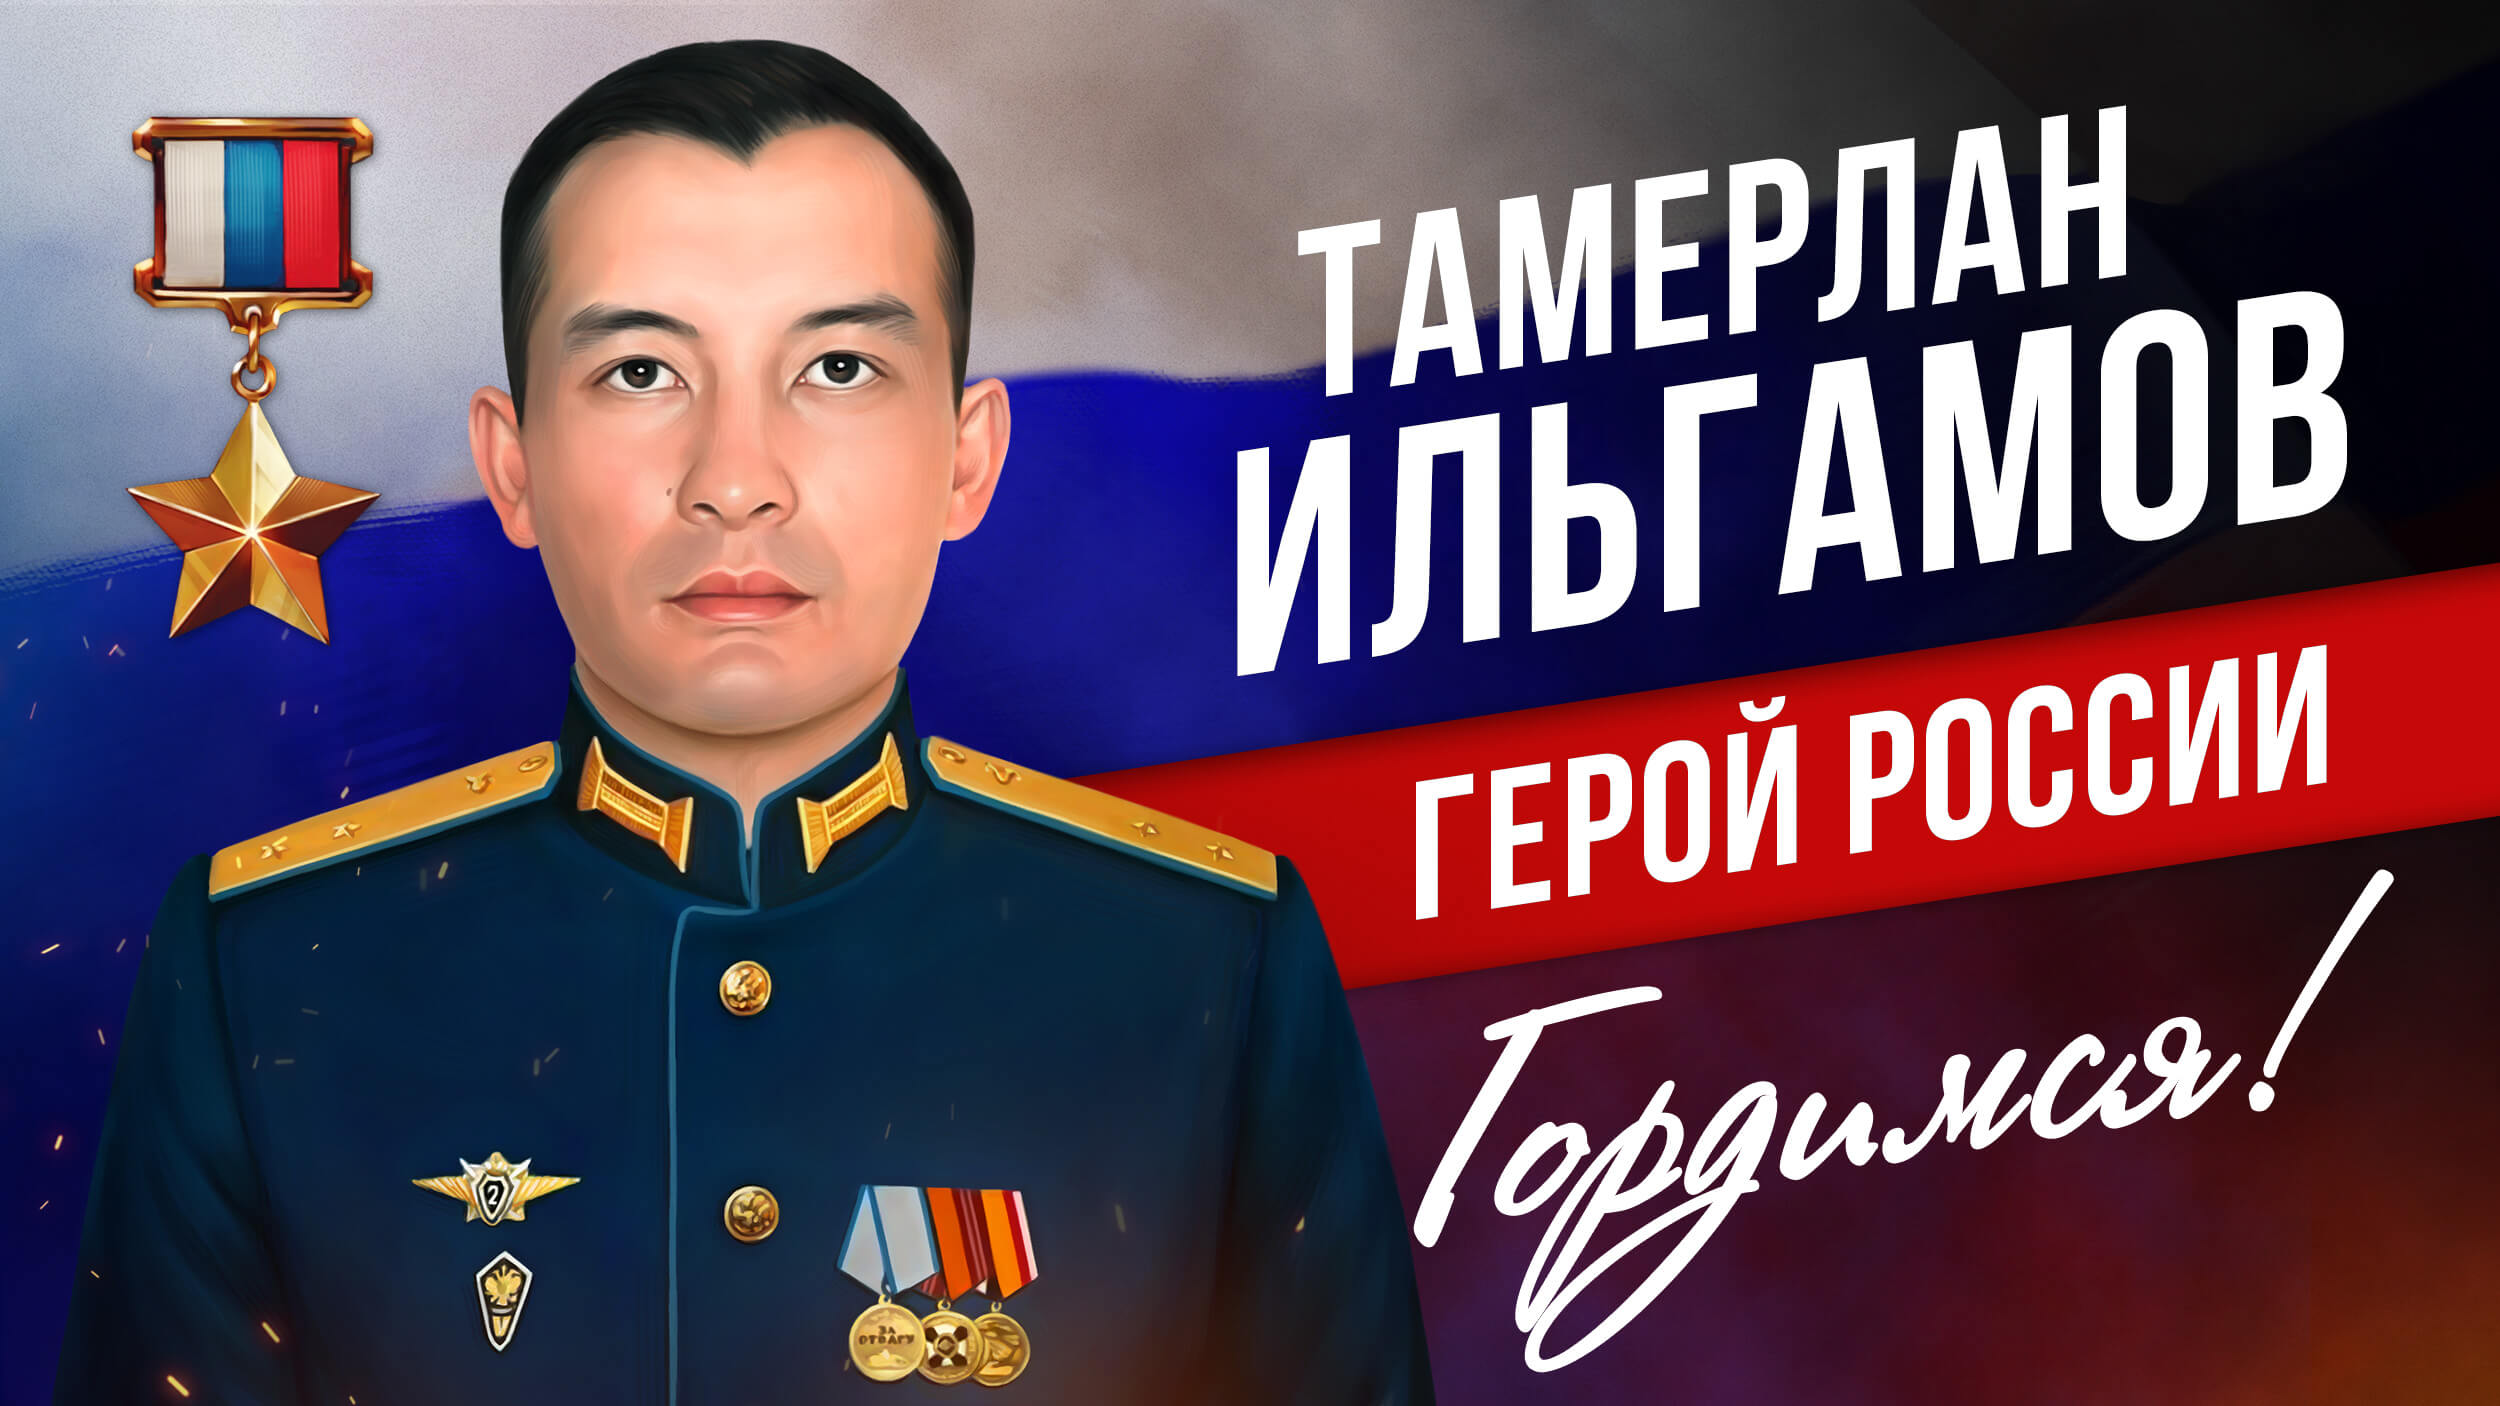 Ильгамов Тамерлан